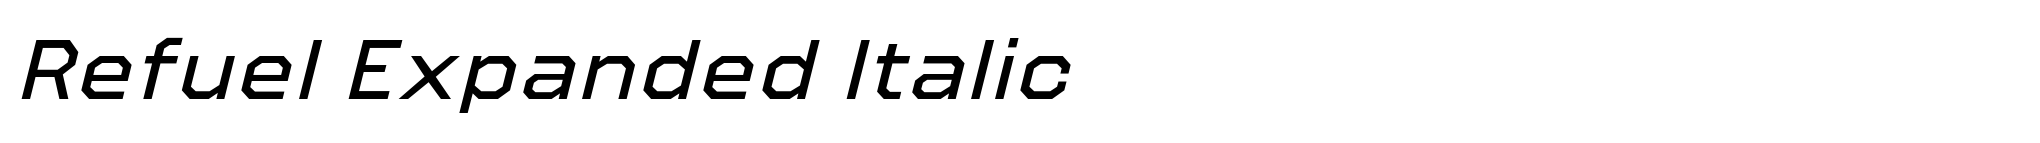 Refuel Expanded Italic image